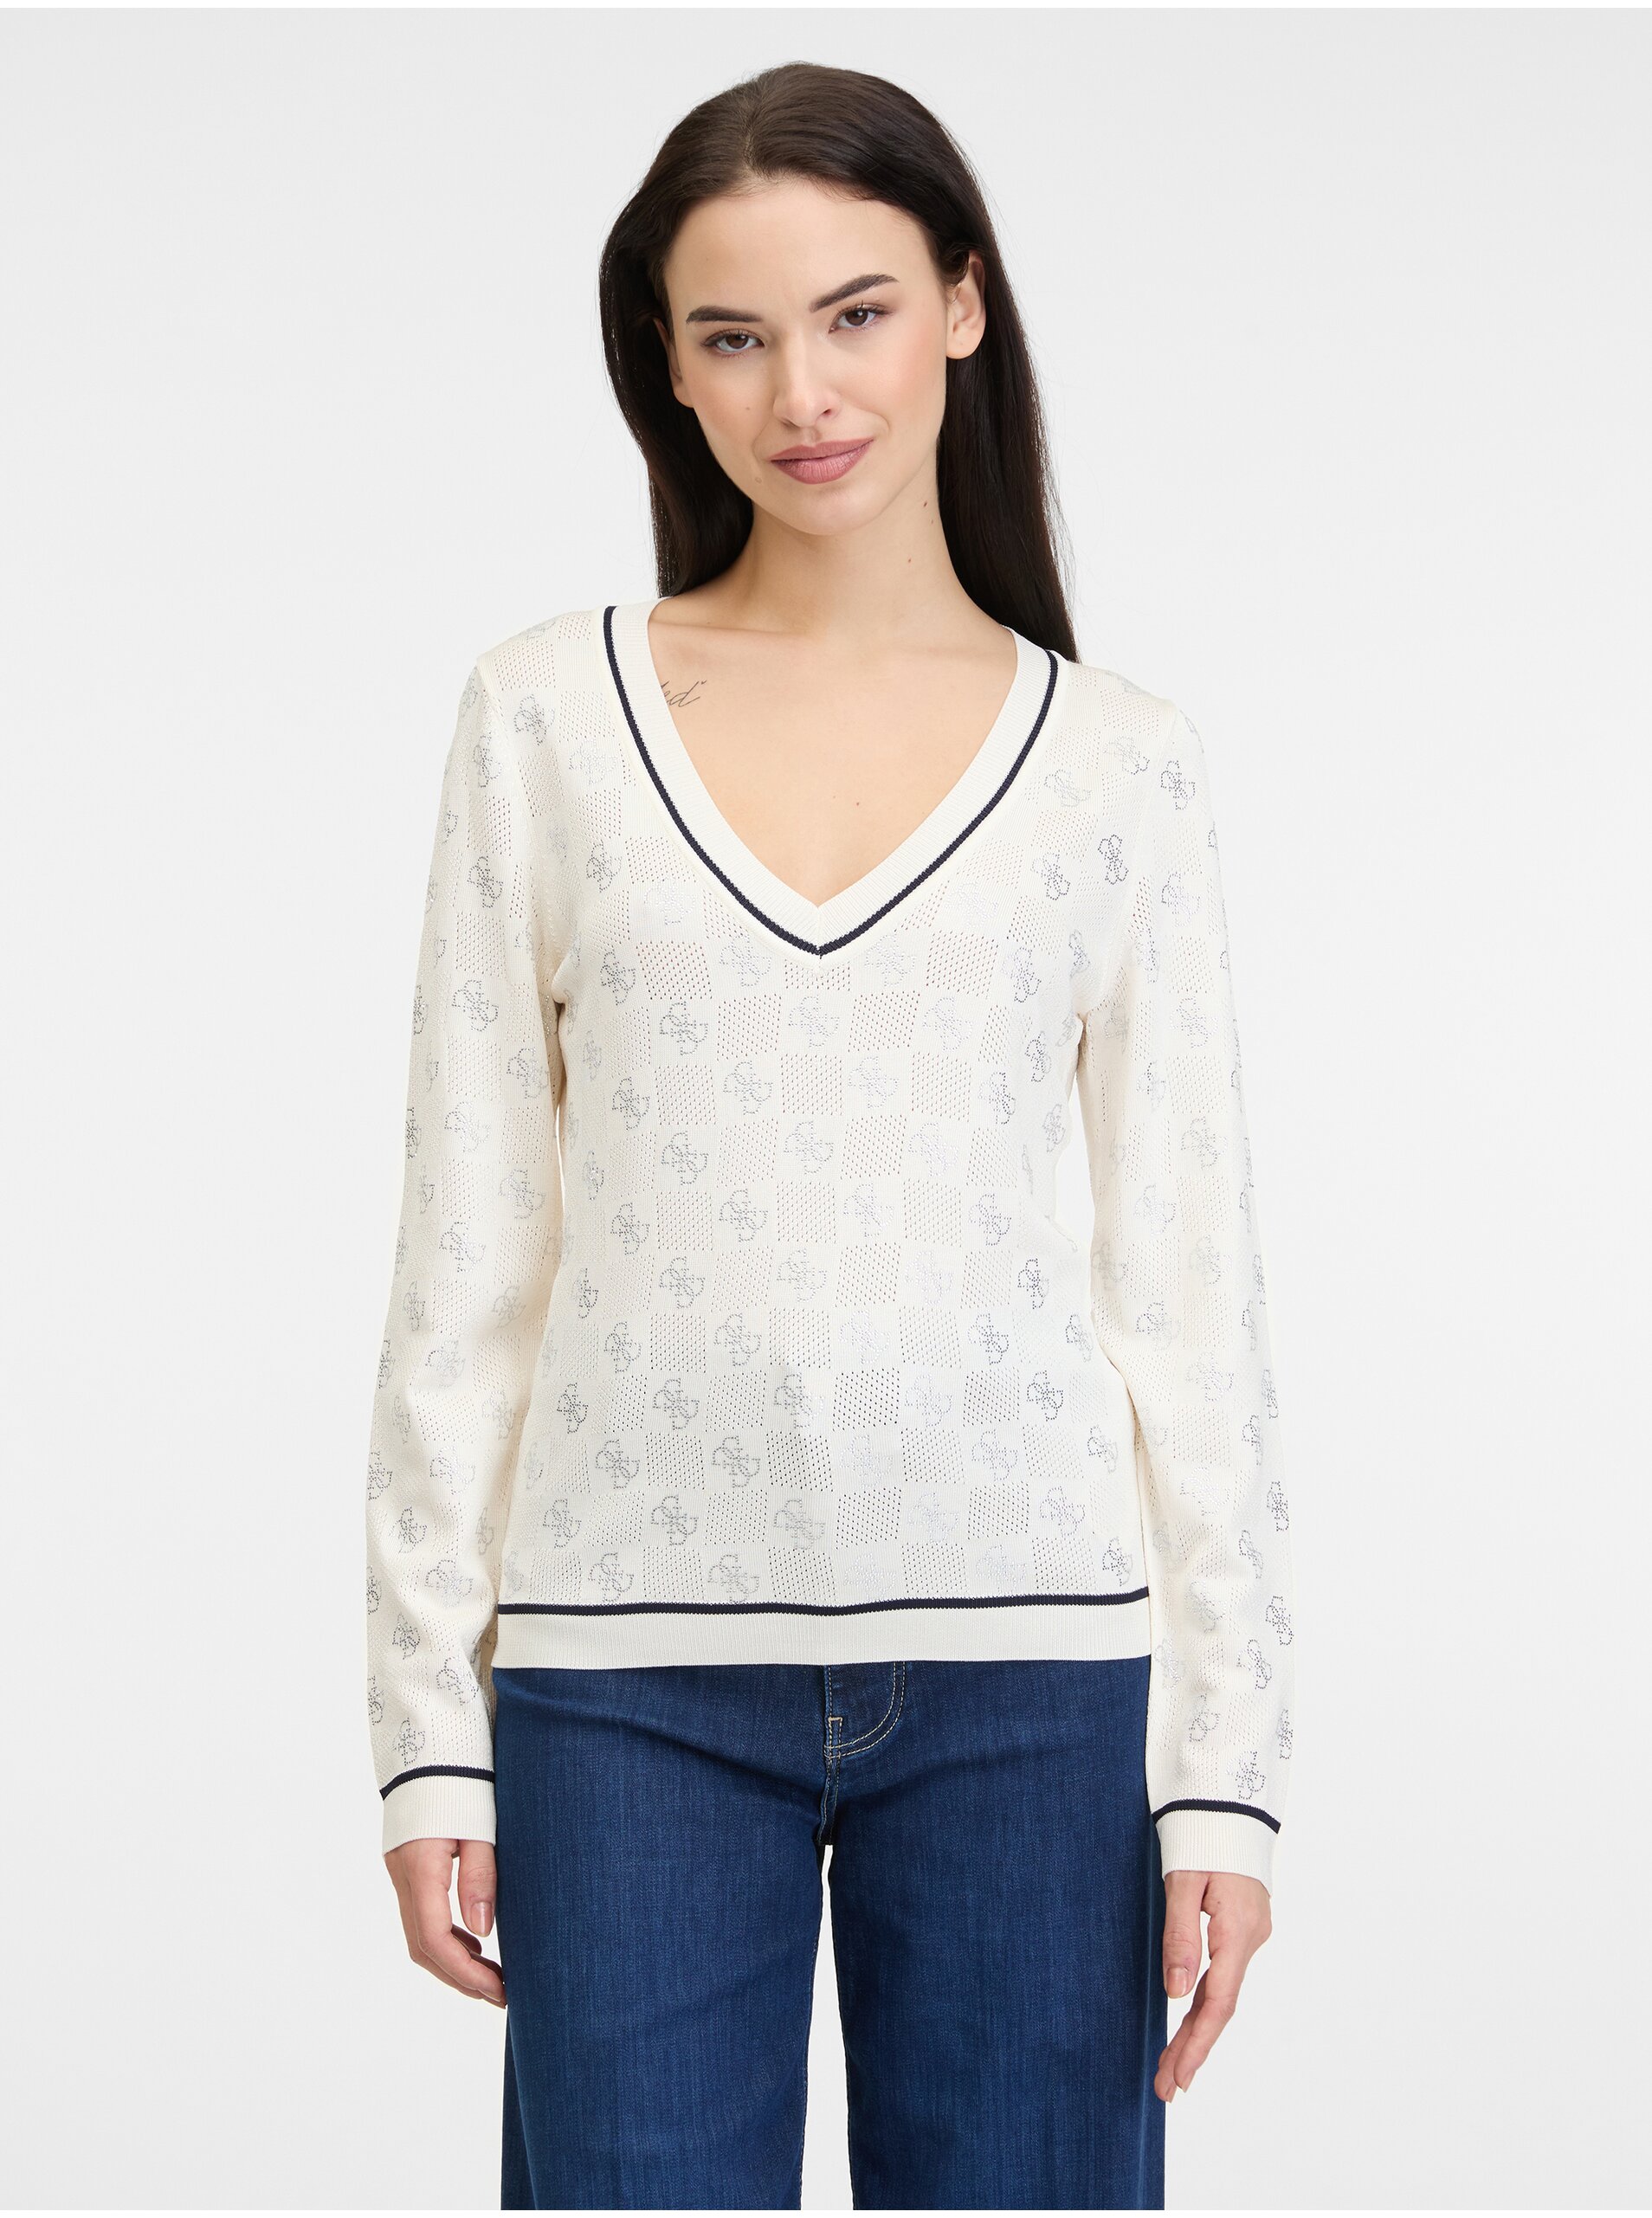 White women's patterned sweater Guess Rosie - Women